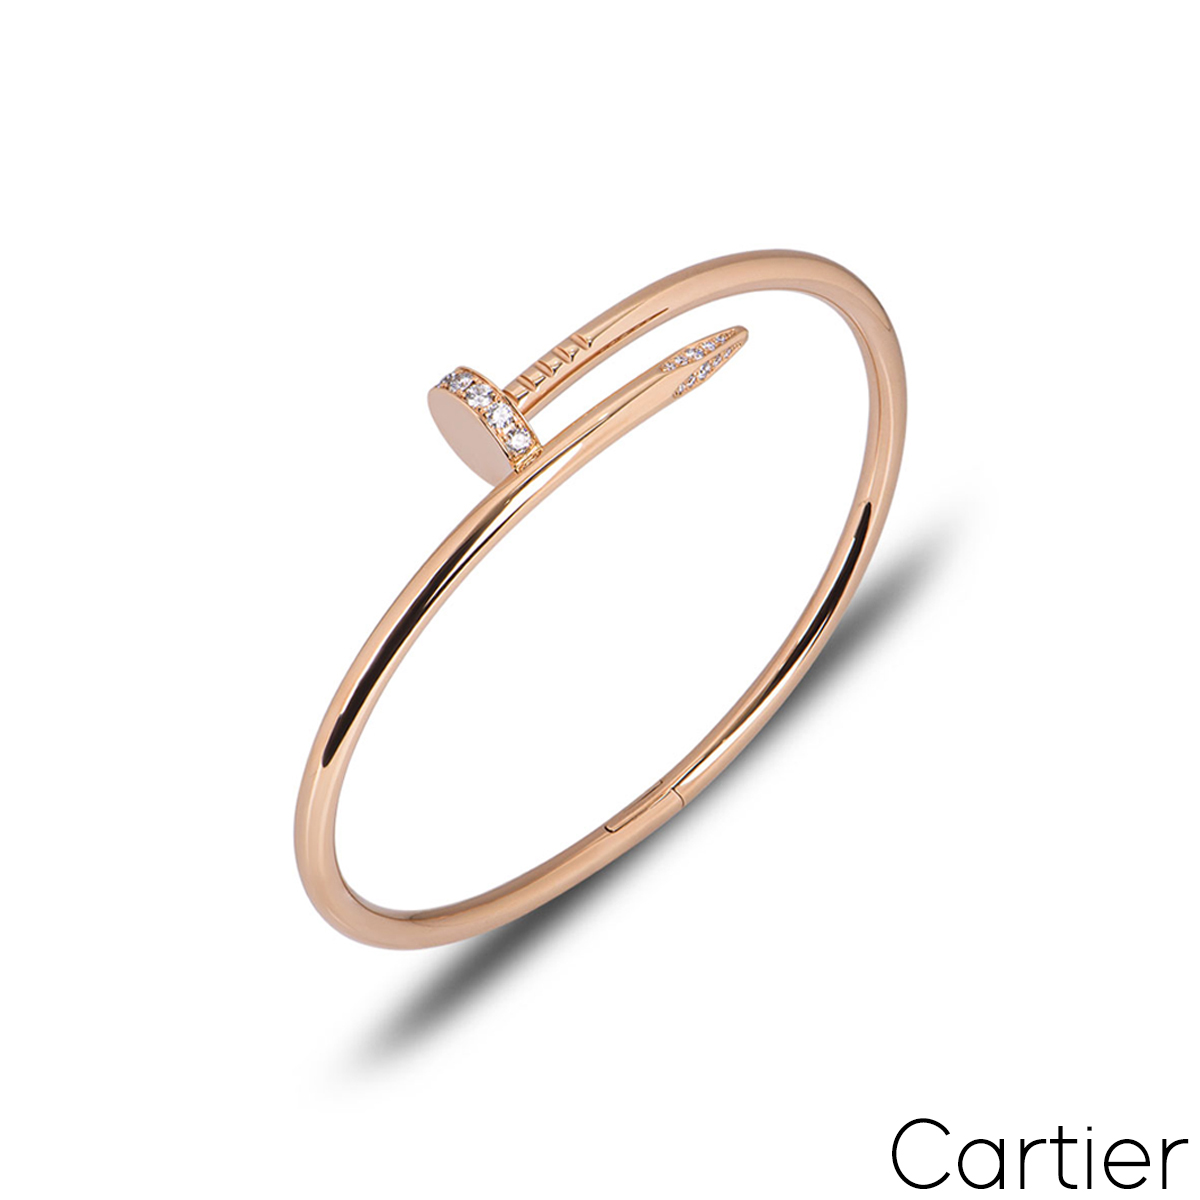 Cartier Rose Gold Diamond Juste Un Clou Bracelet Size 17 B6048517